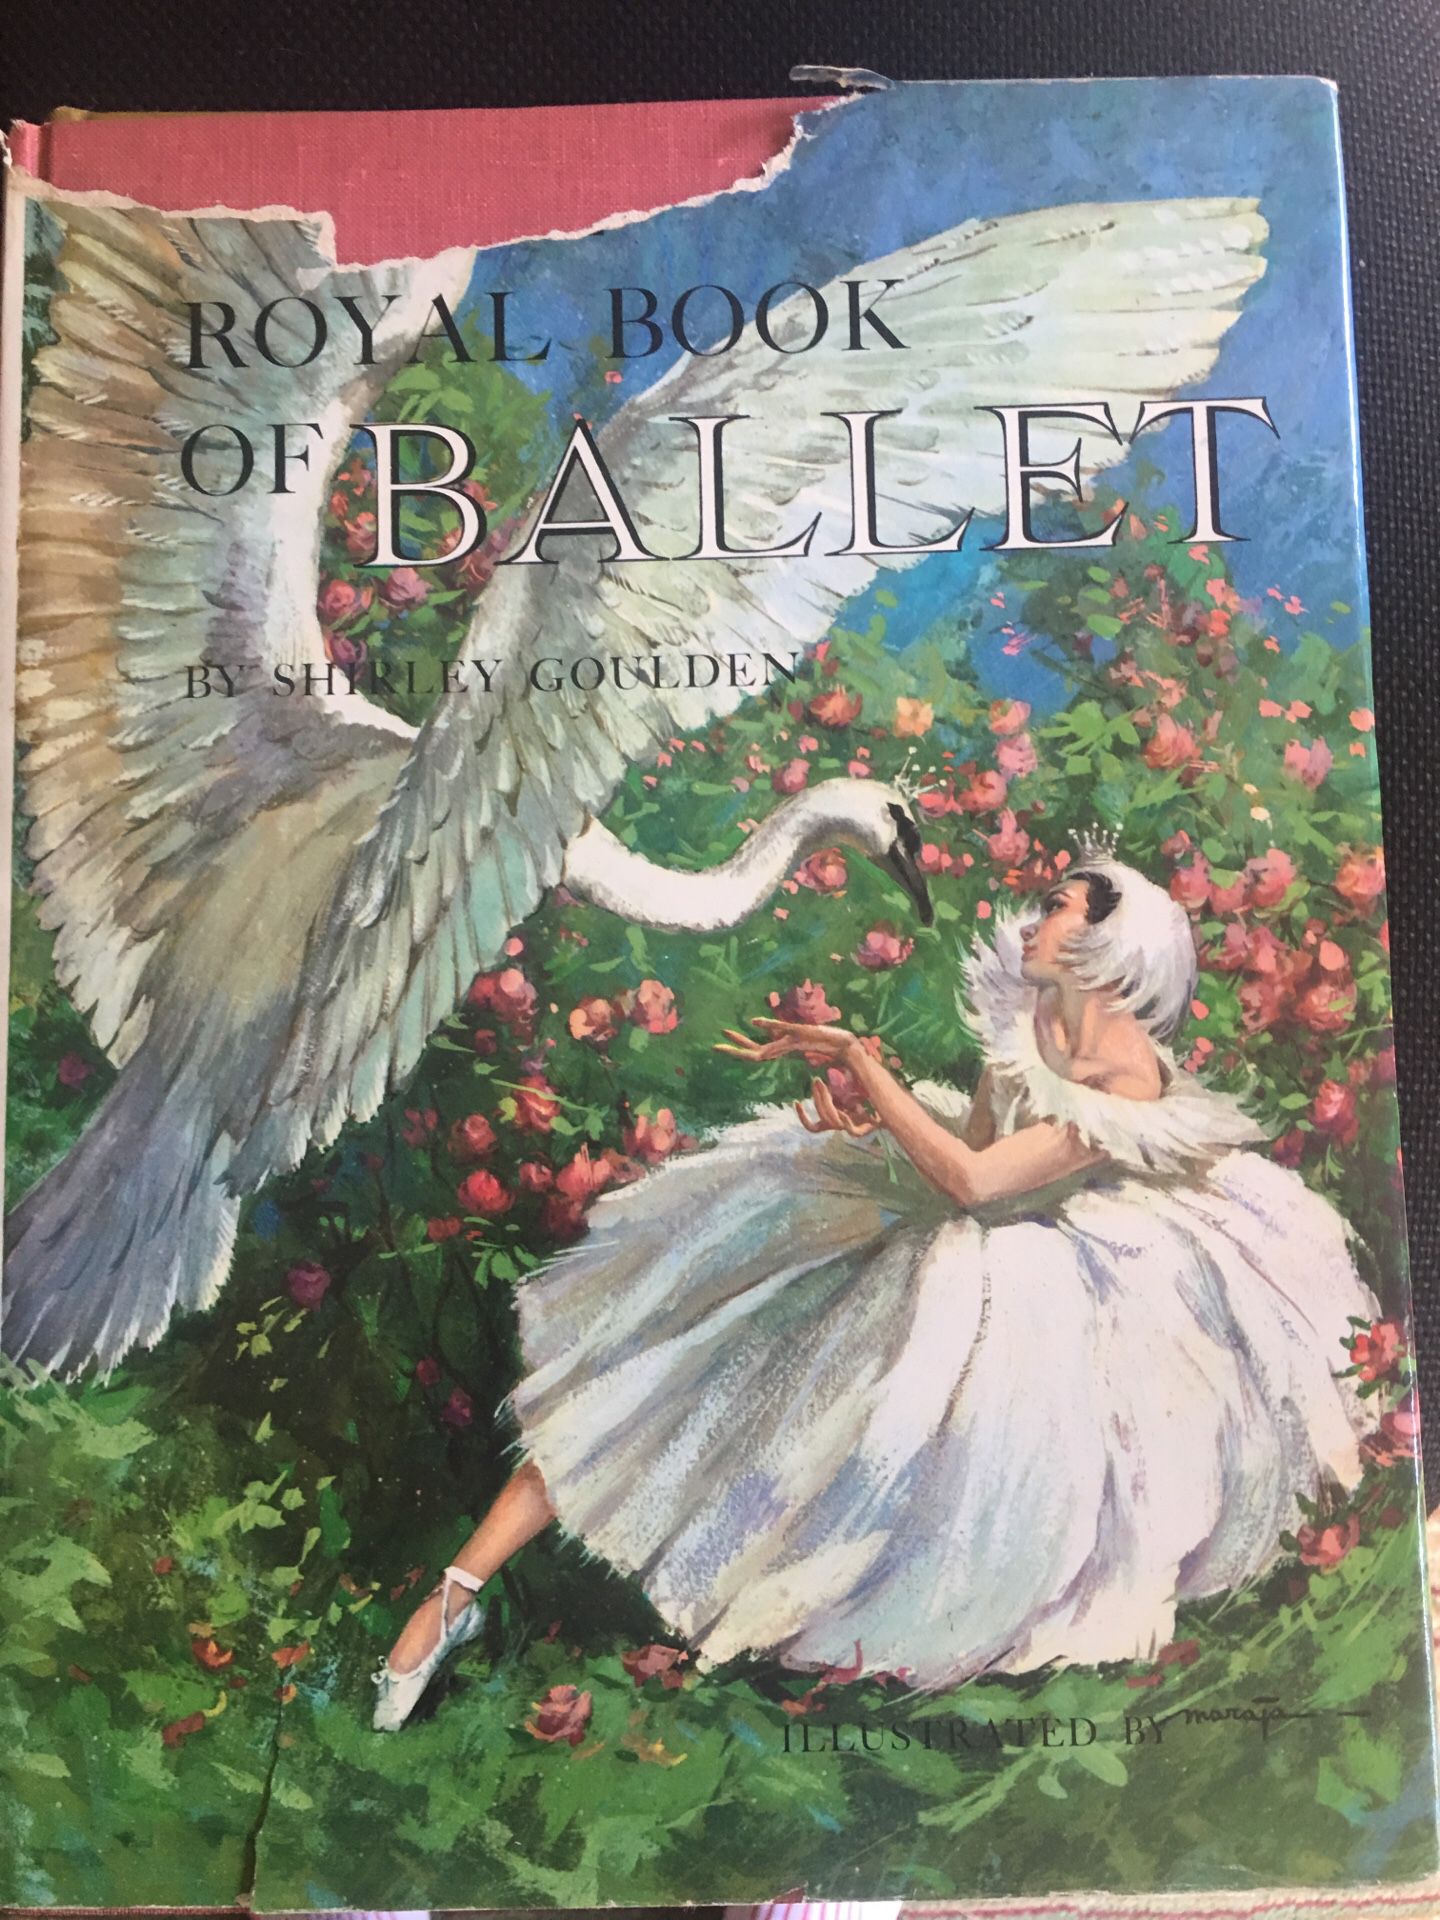 Royal Book of Ballet